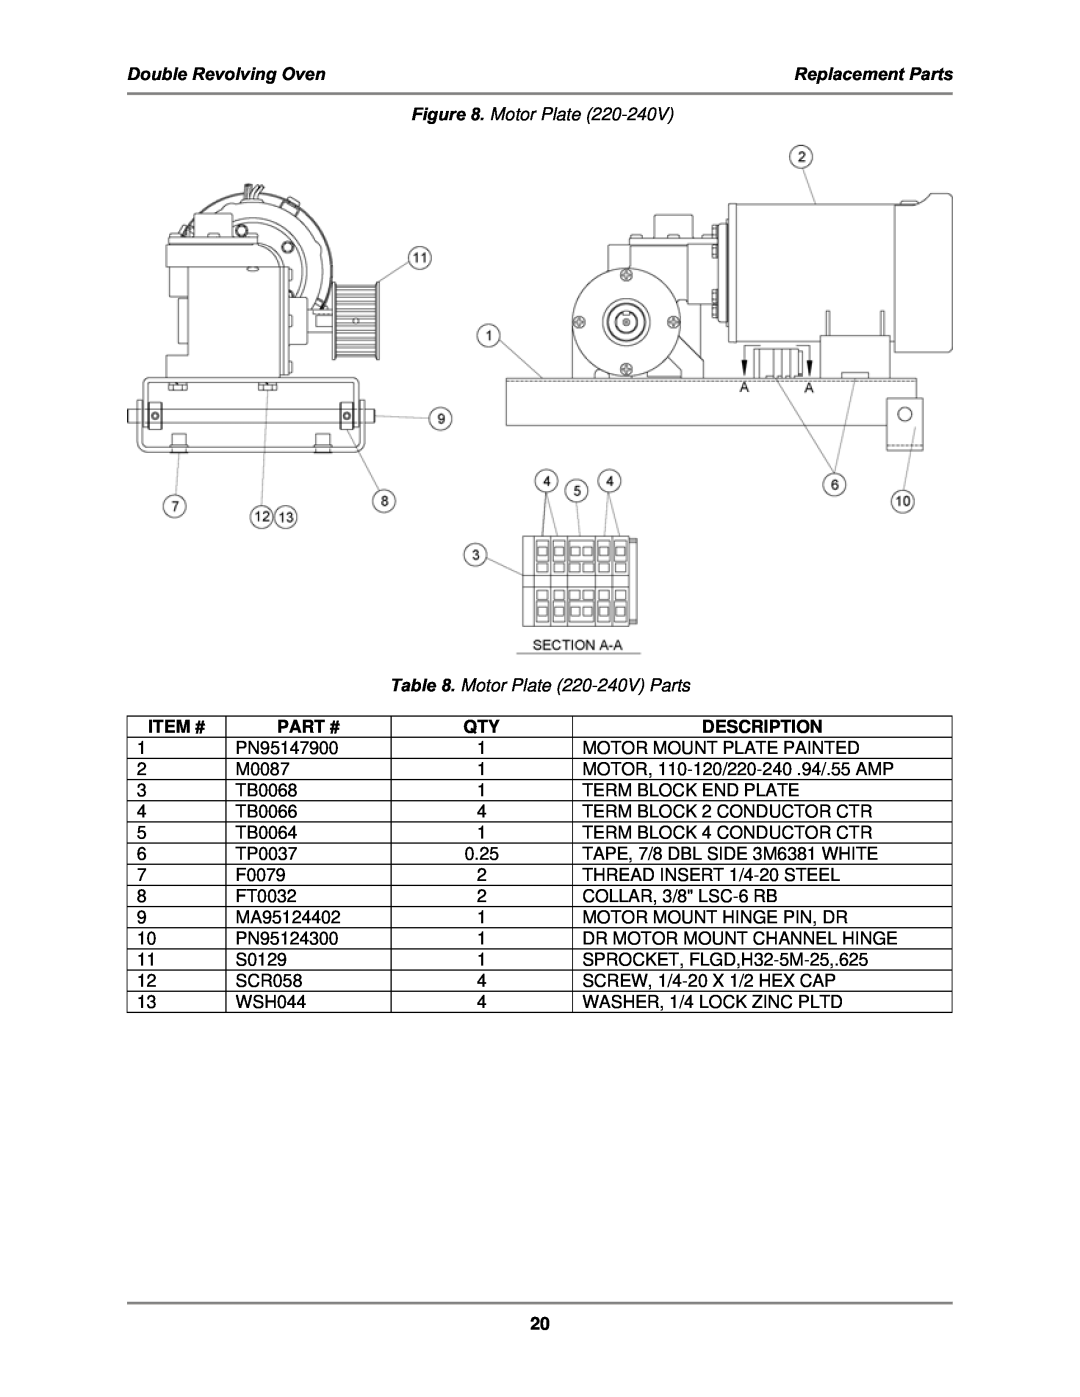 Bakers Pride Oven DR-34 service manual Double Revolving Oven, Replacement Parts, Item #, Part #, Description 